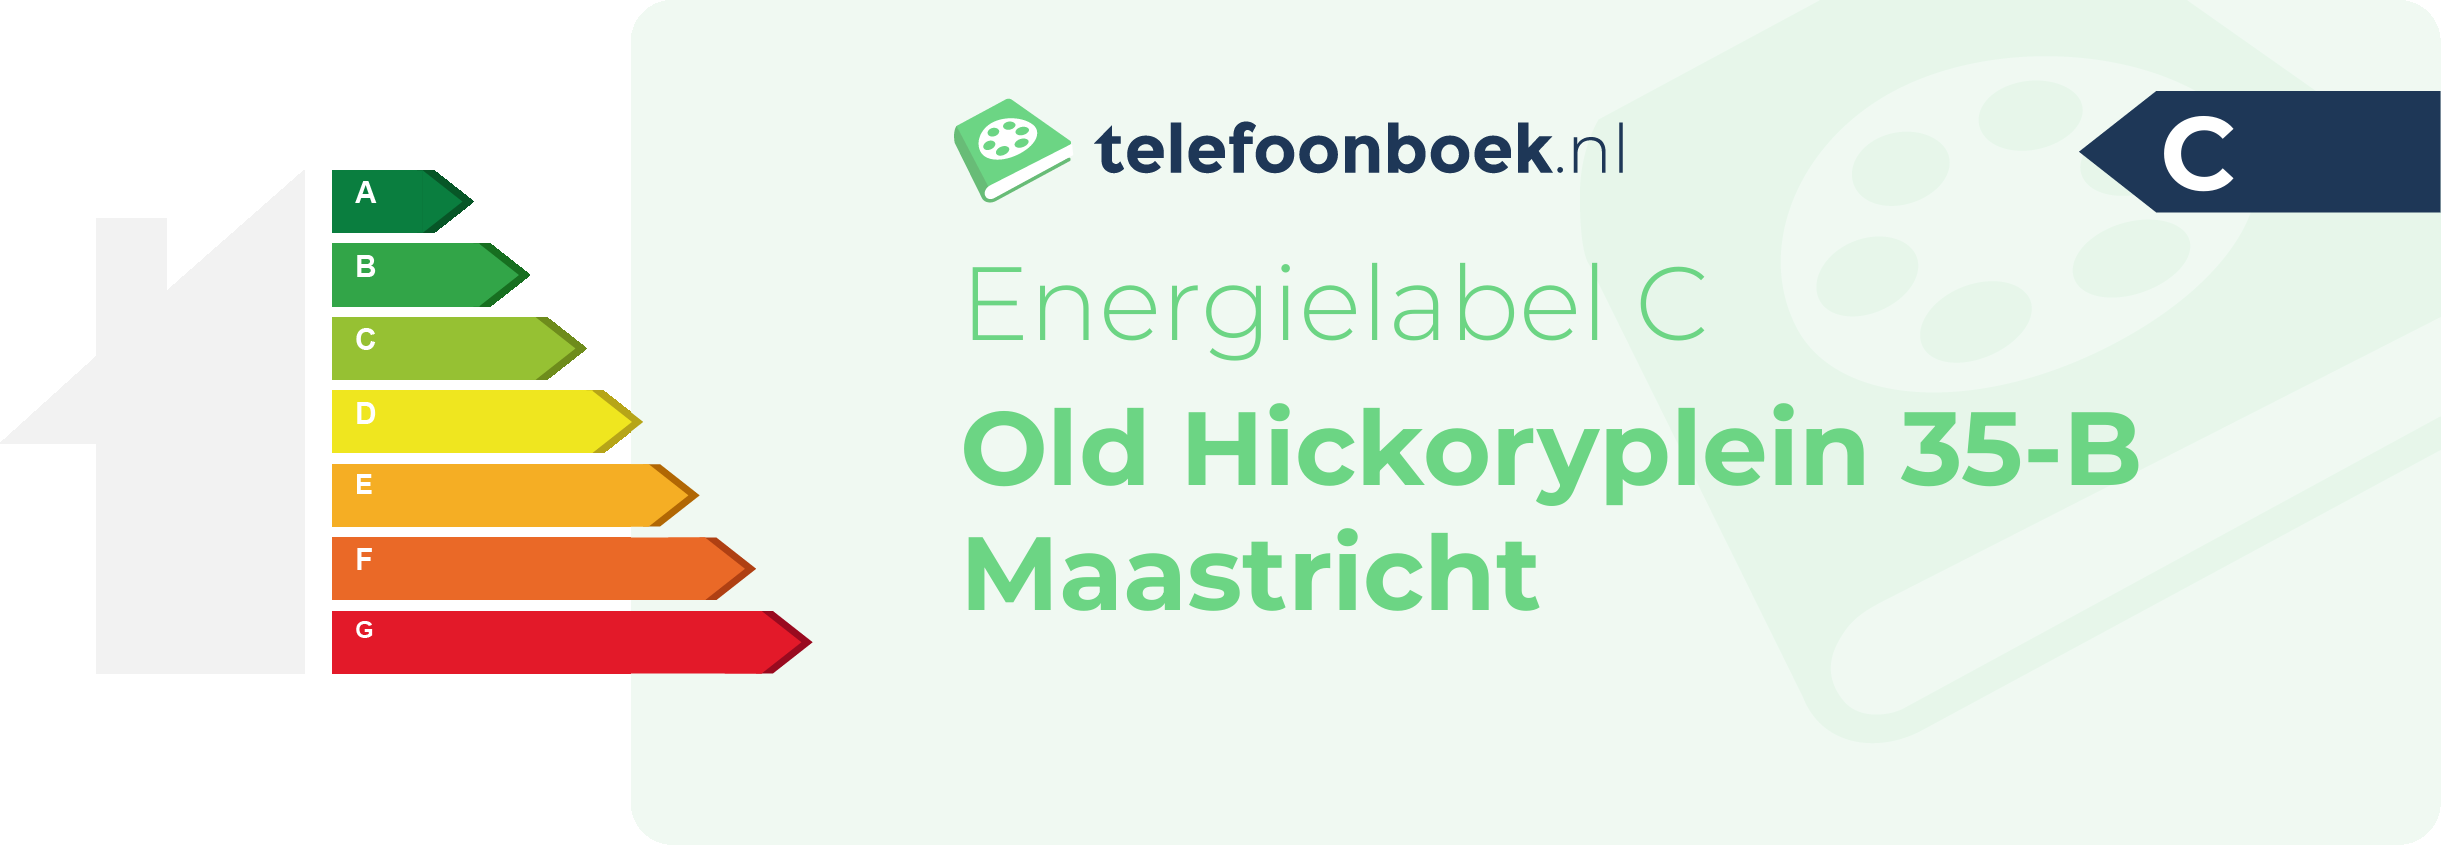 Energielabel Old Hickoryplein 35-B Maastricht